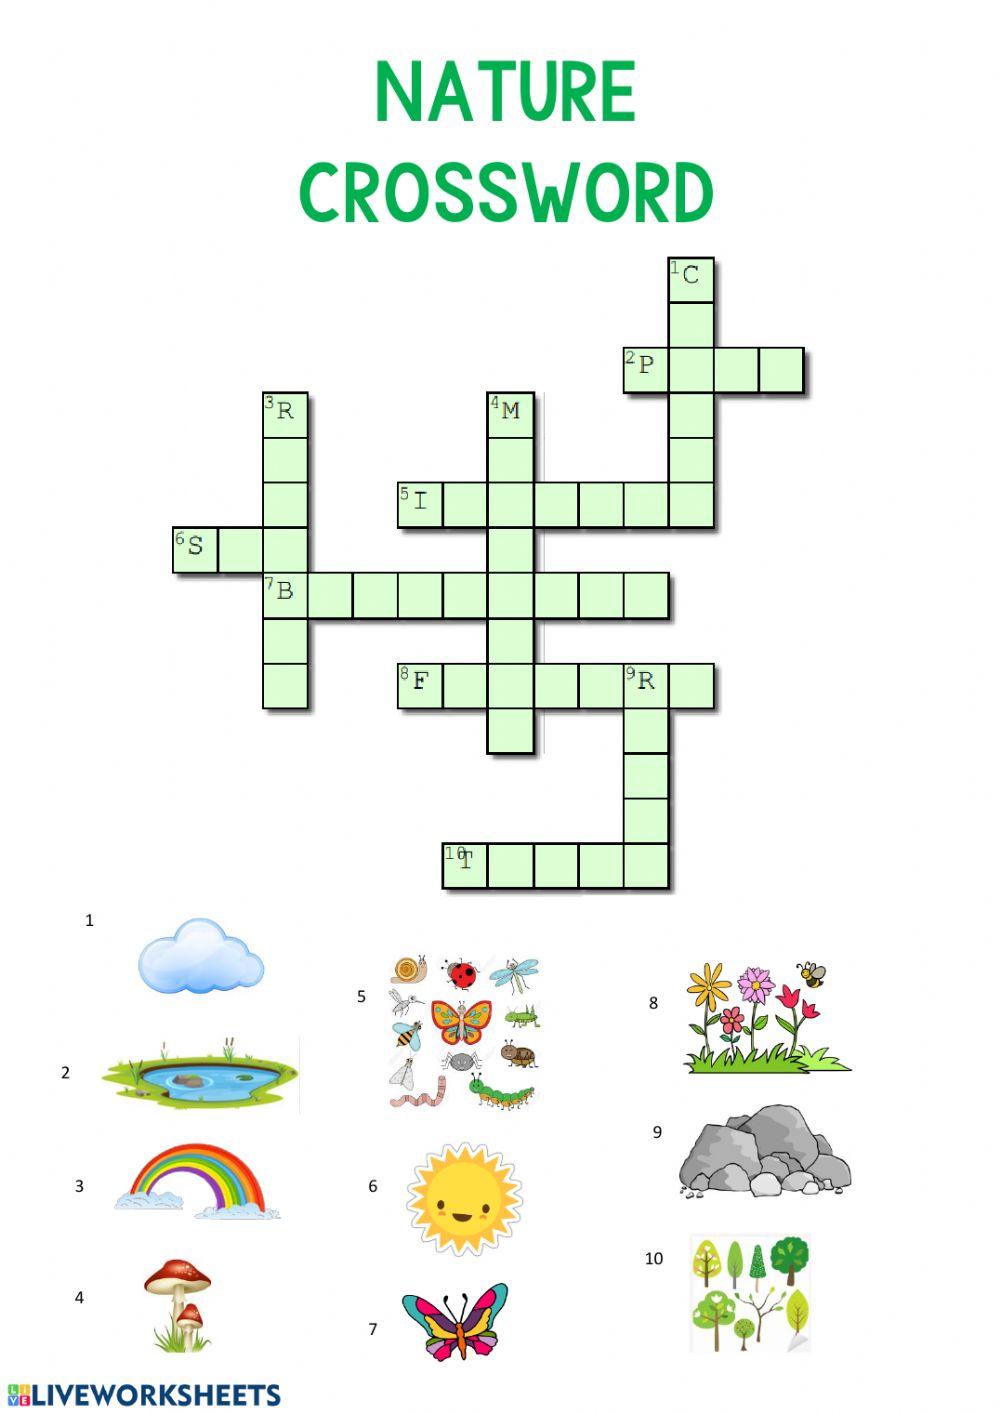 Crossword - Nature